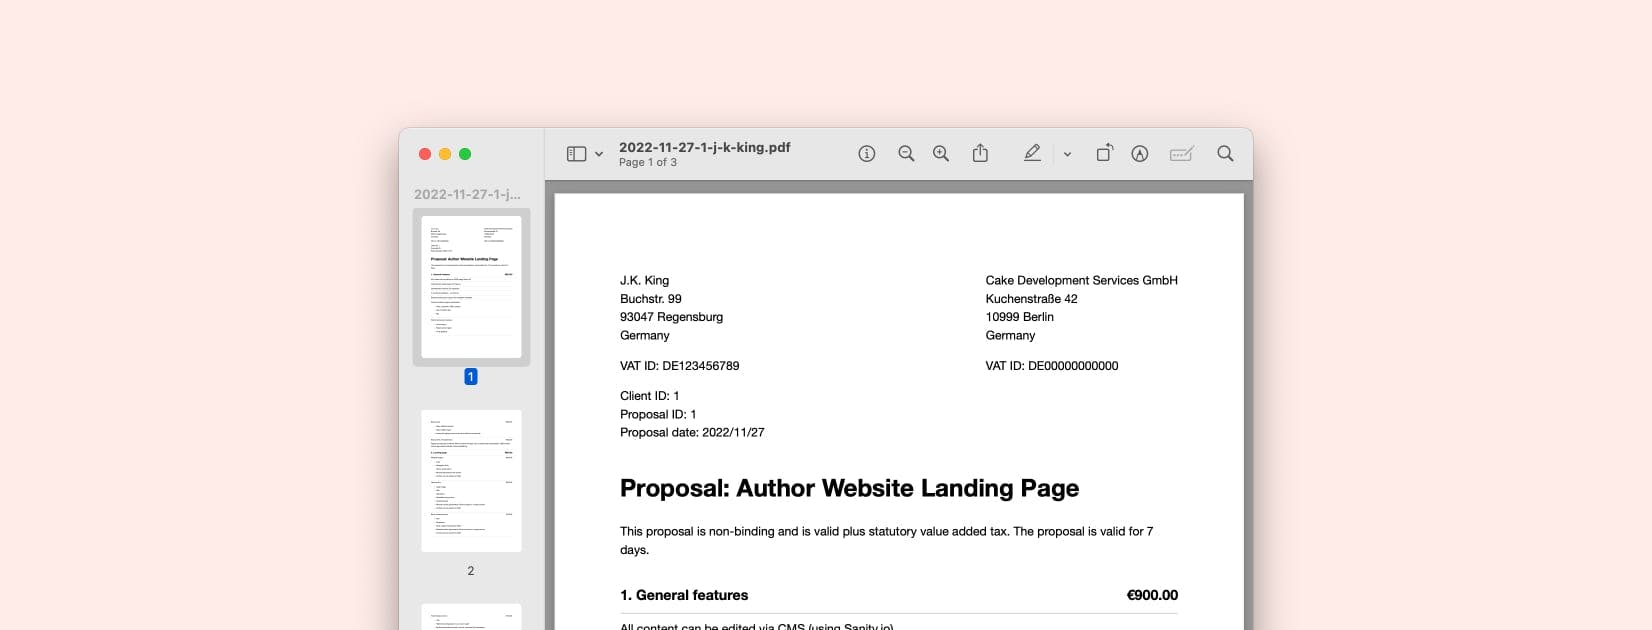 A professional-looking web development proposal as a PDF